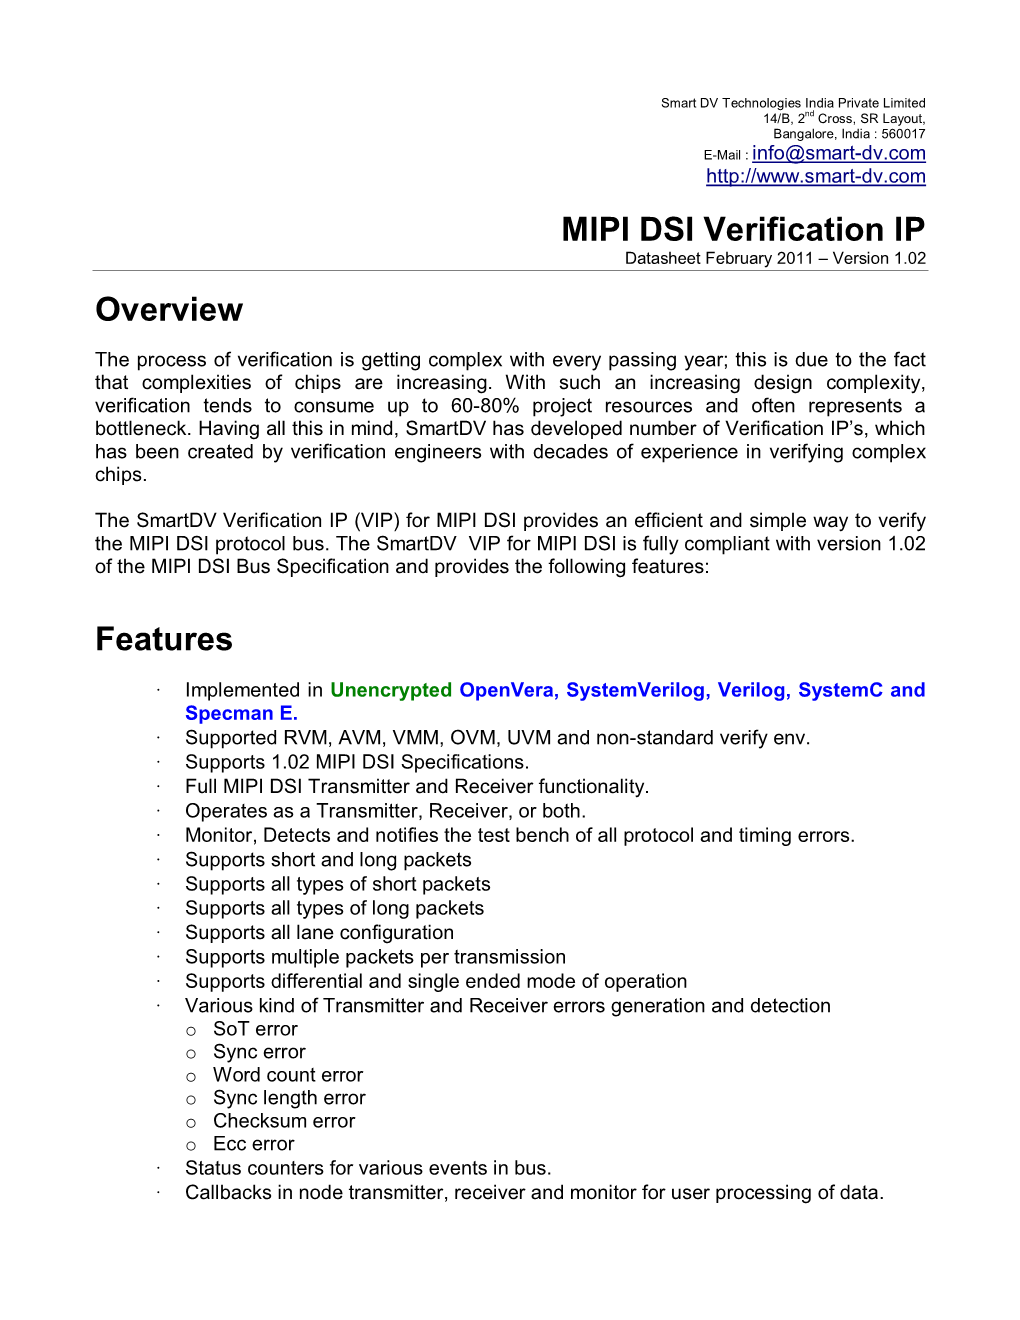 MIPI DSI Verification IP Overview Features